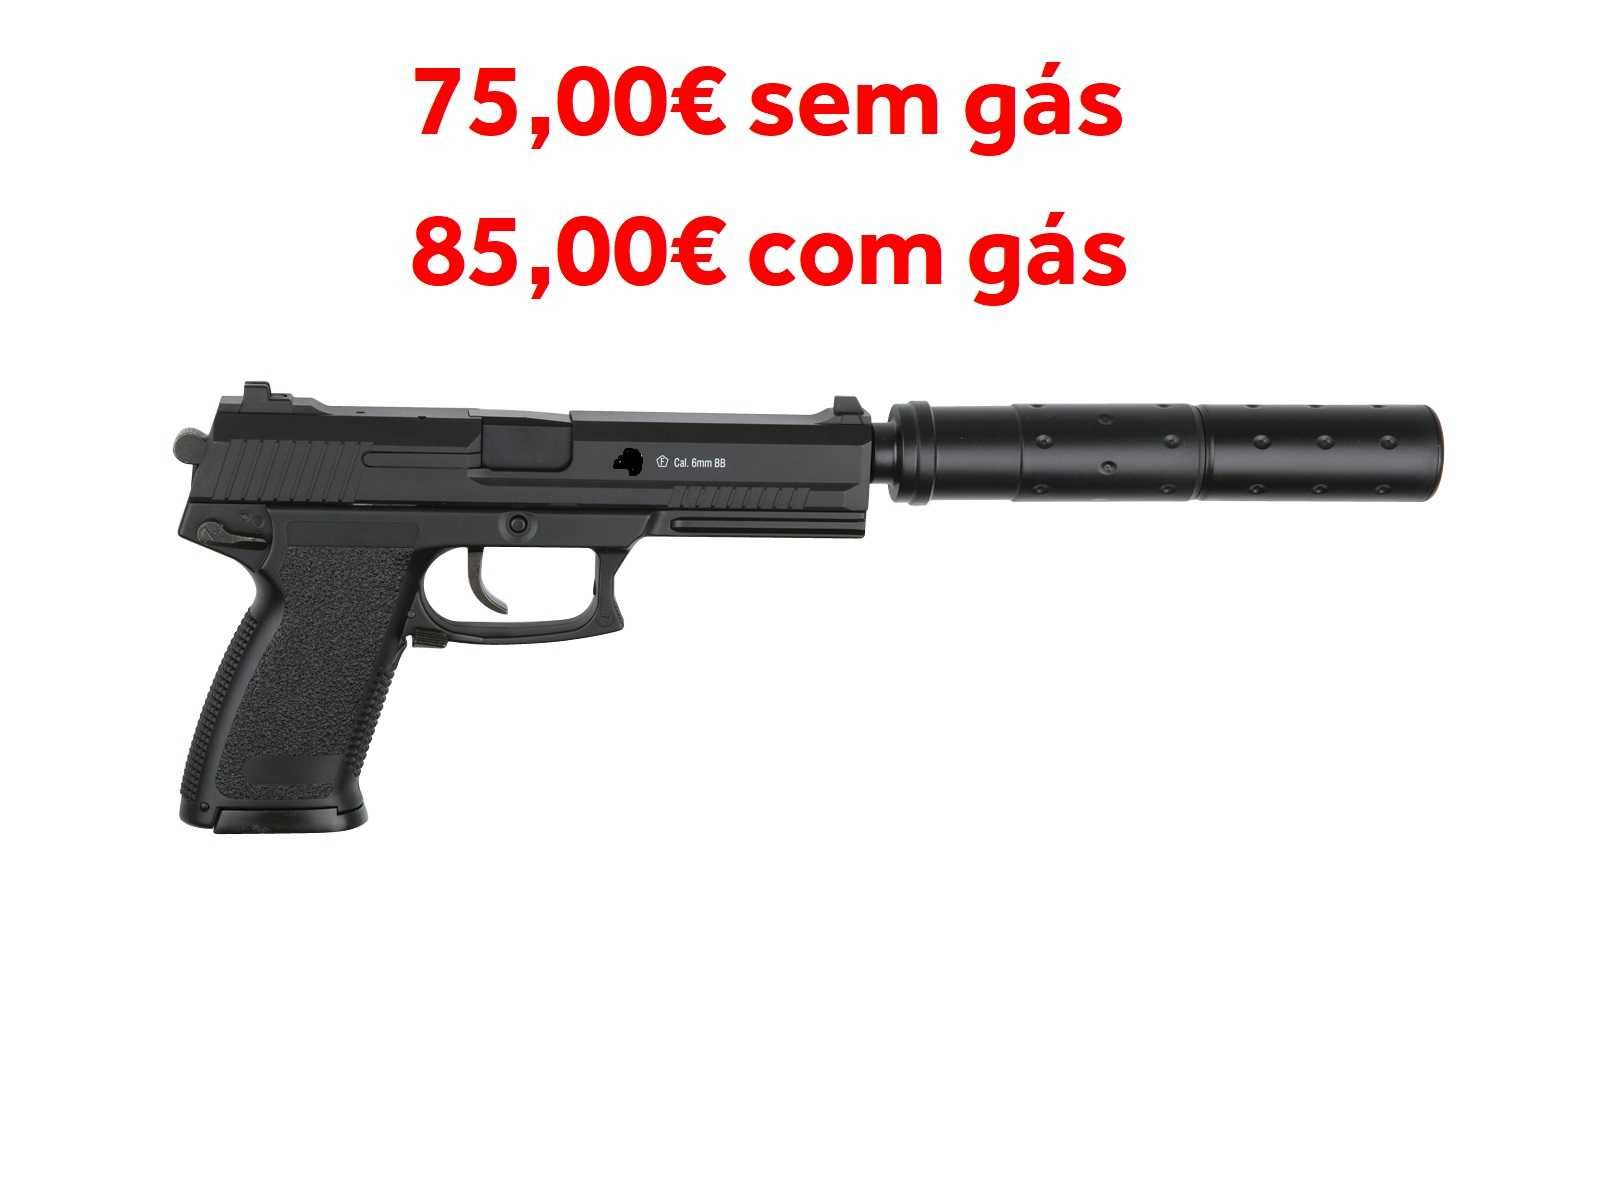 Pistola Airsoft Greengas MK23 (SEM Blowback) e CZ Shadow de CO2 FULL METAL BLOWBACK novas